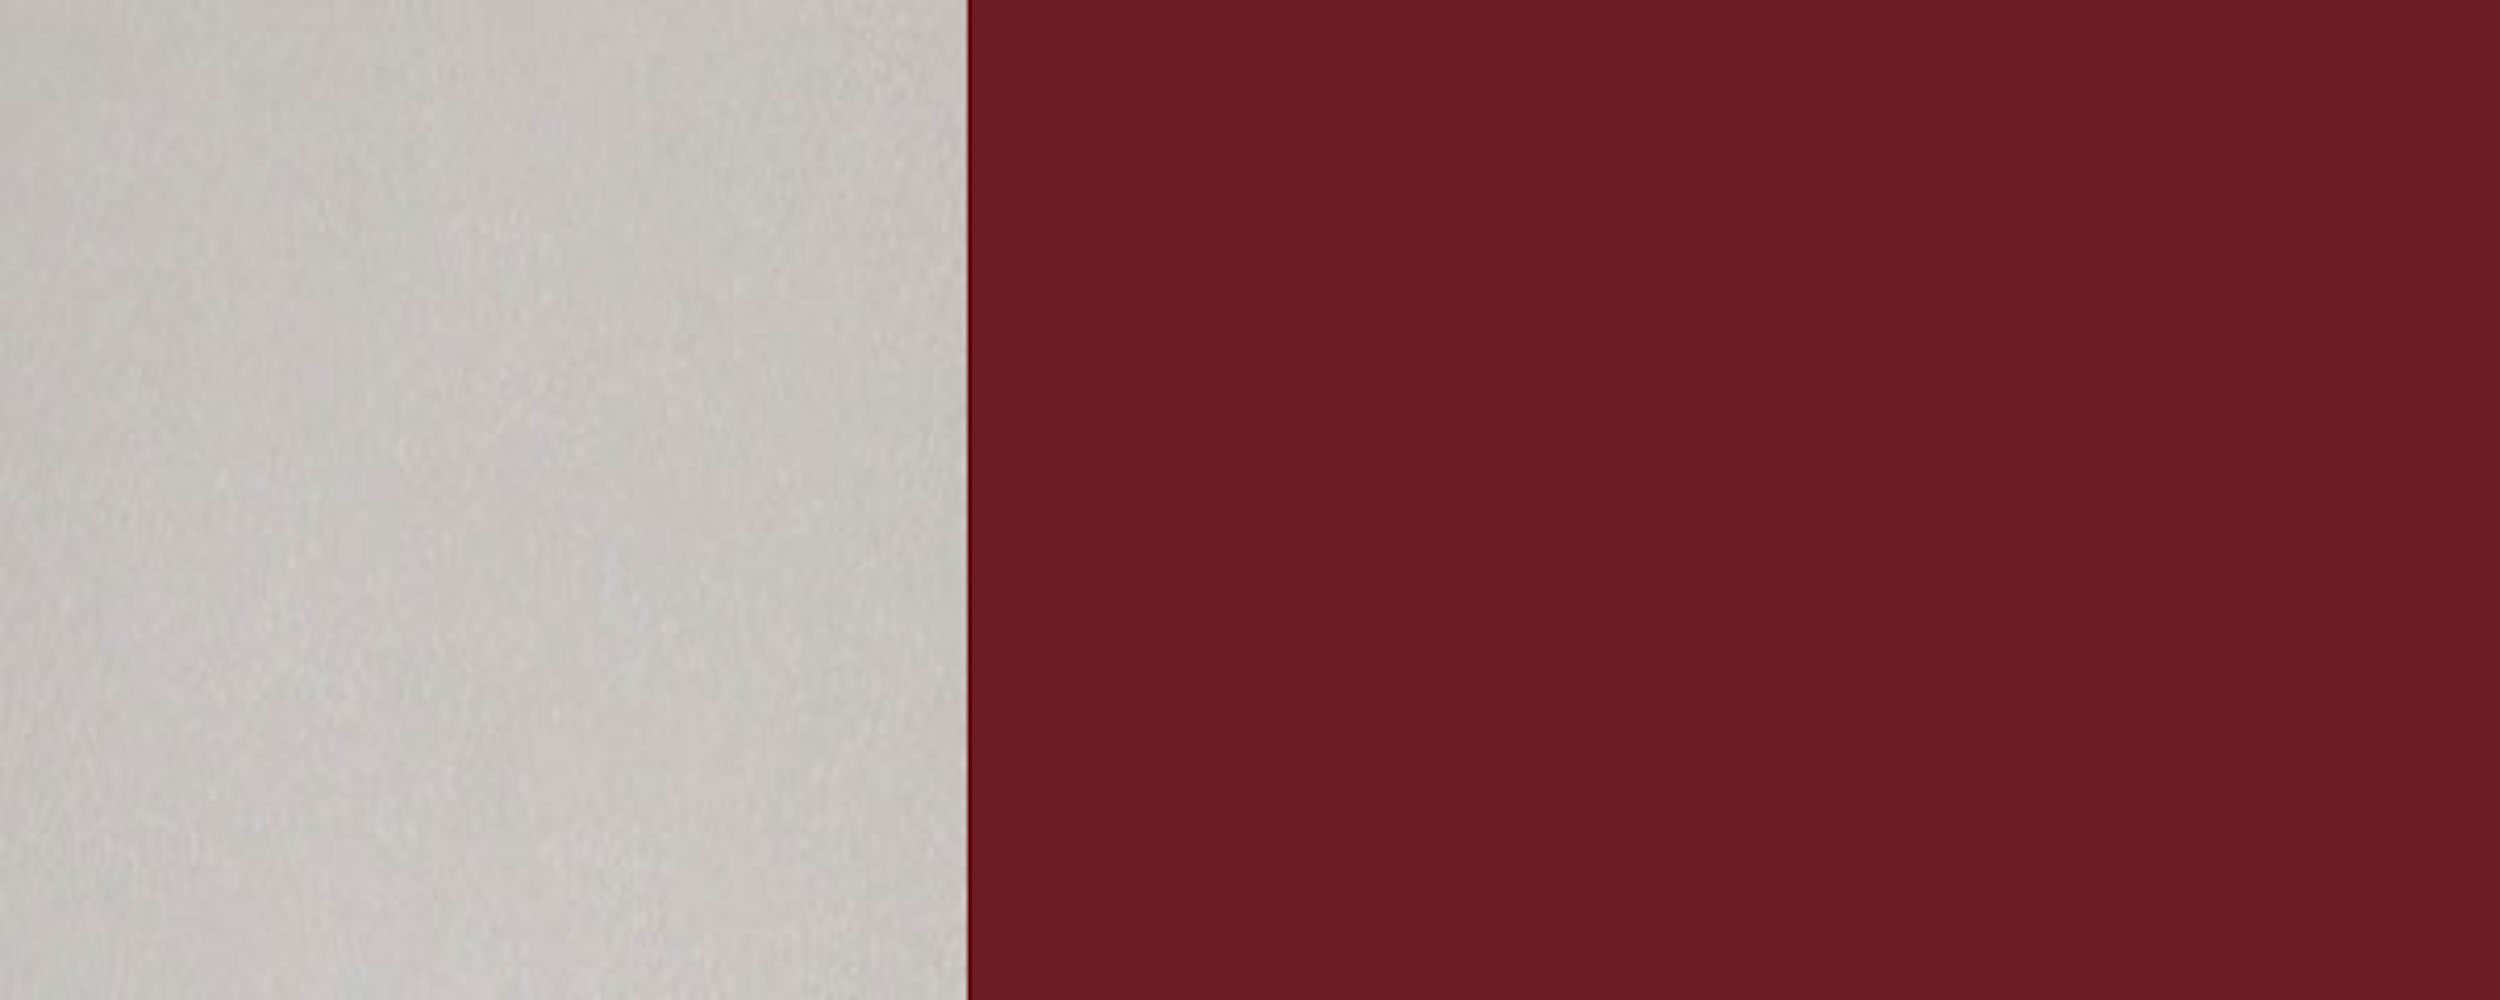 purpurrot 2-türig 3004 Hochschrank Feldmann-Wohnen RAL Rimini wählbar Front- (Rimini) 60cm matt Korpusfarbe und